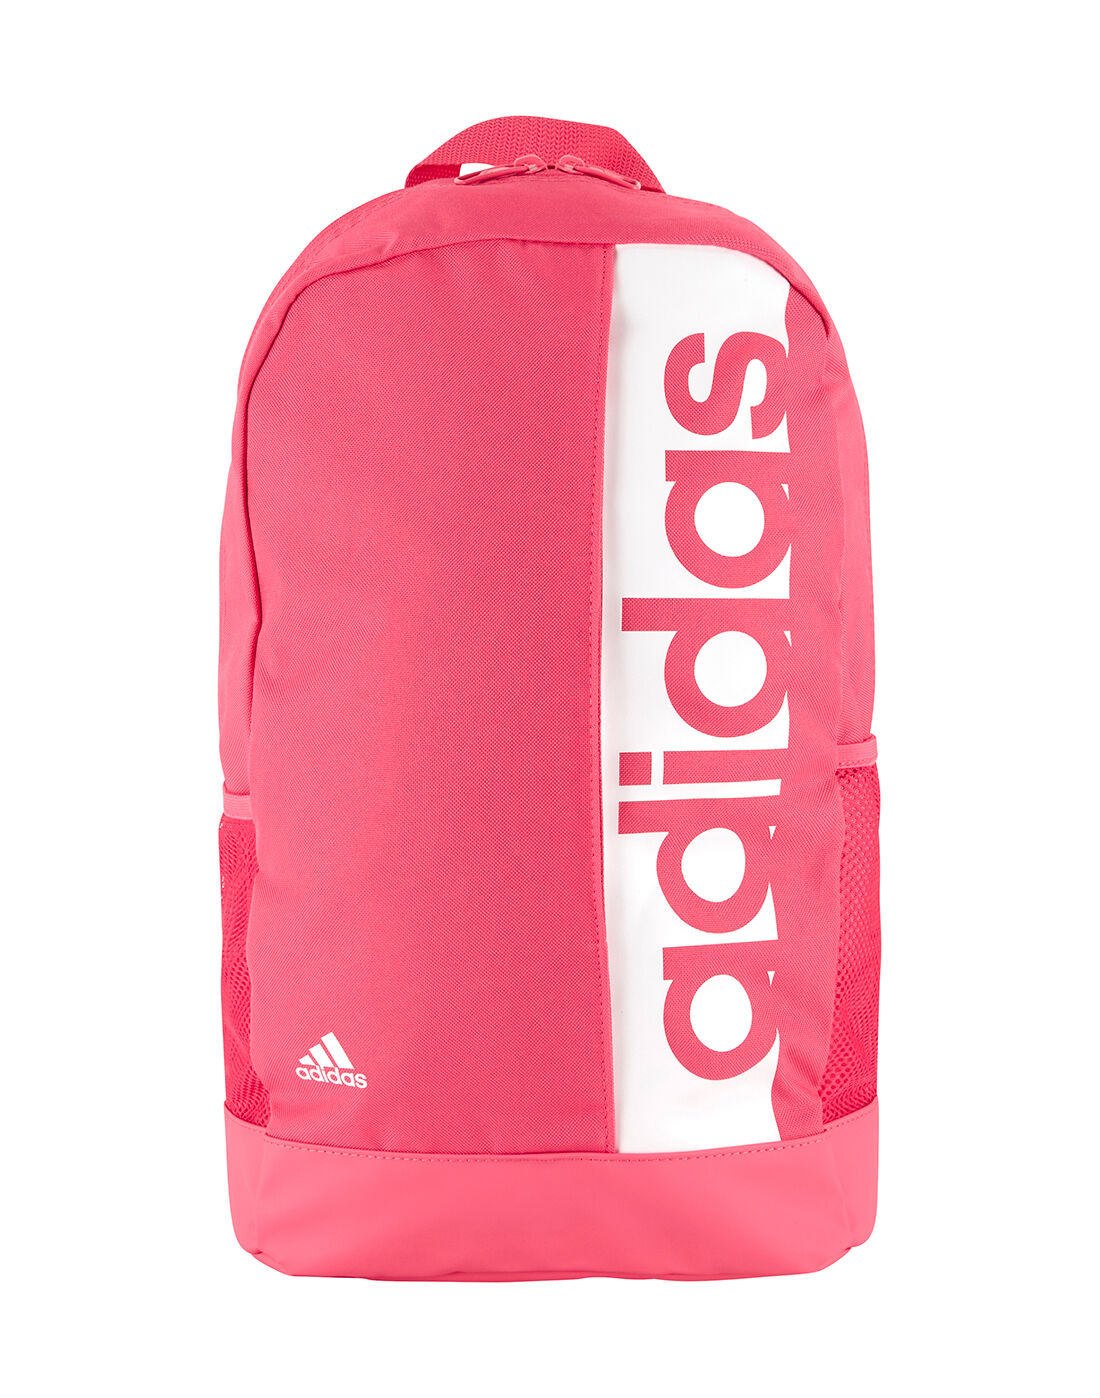 adidas pink bag